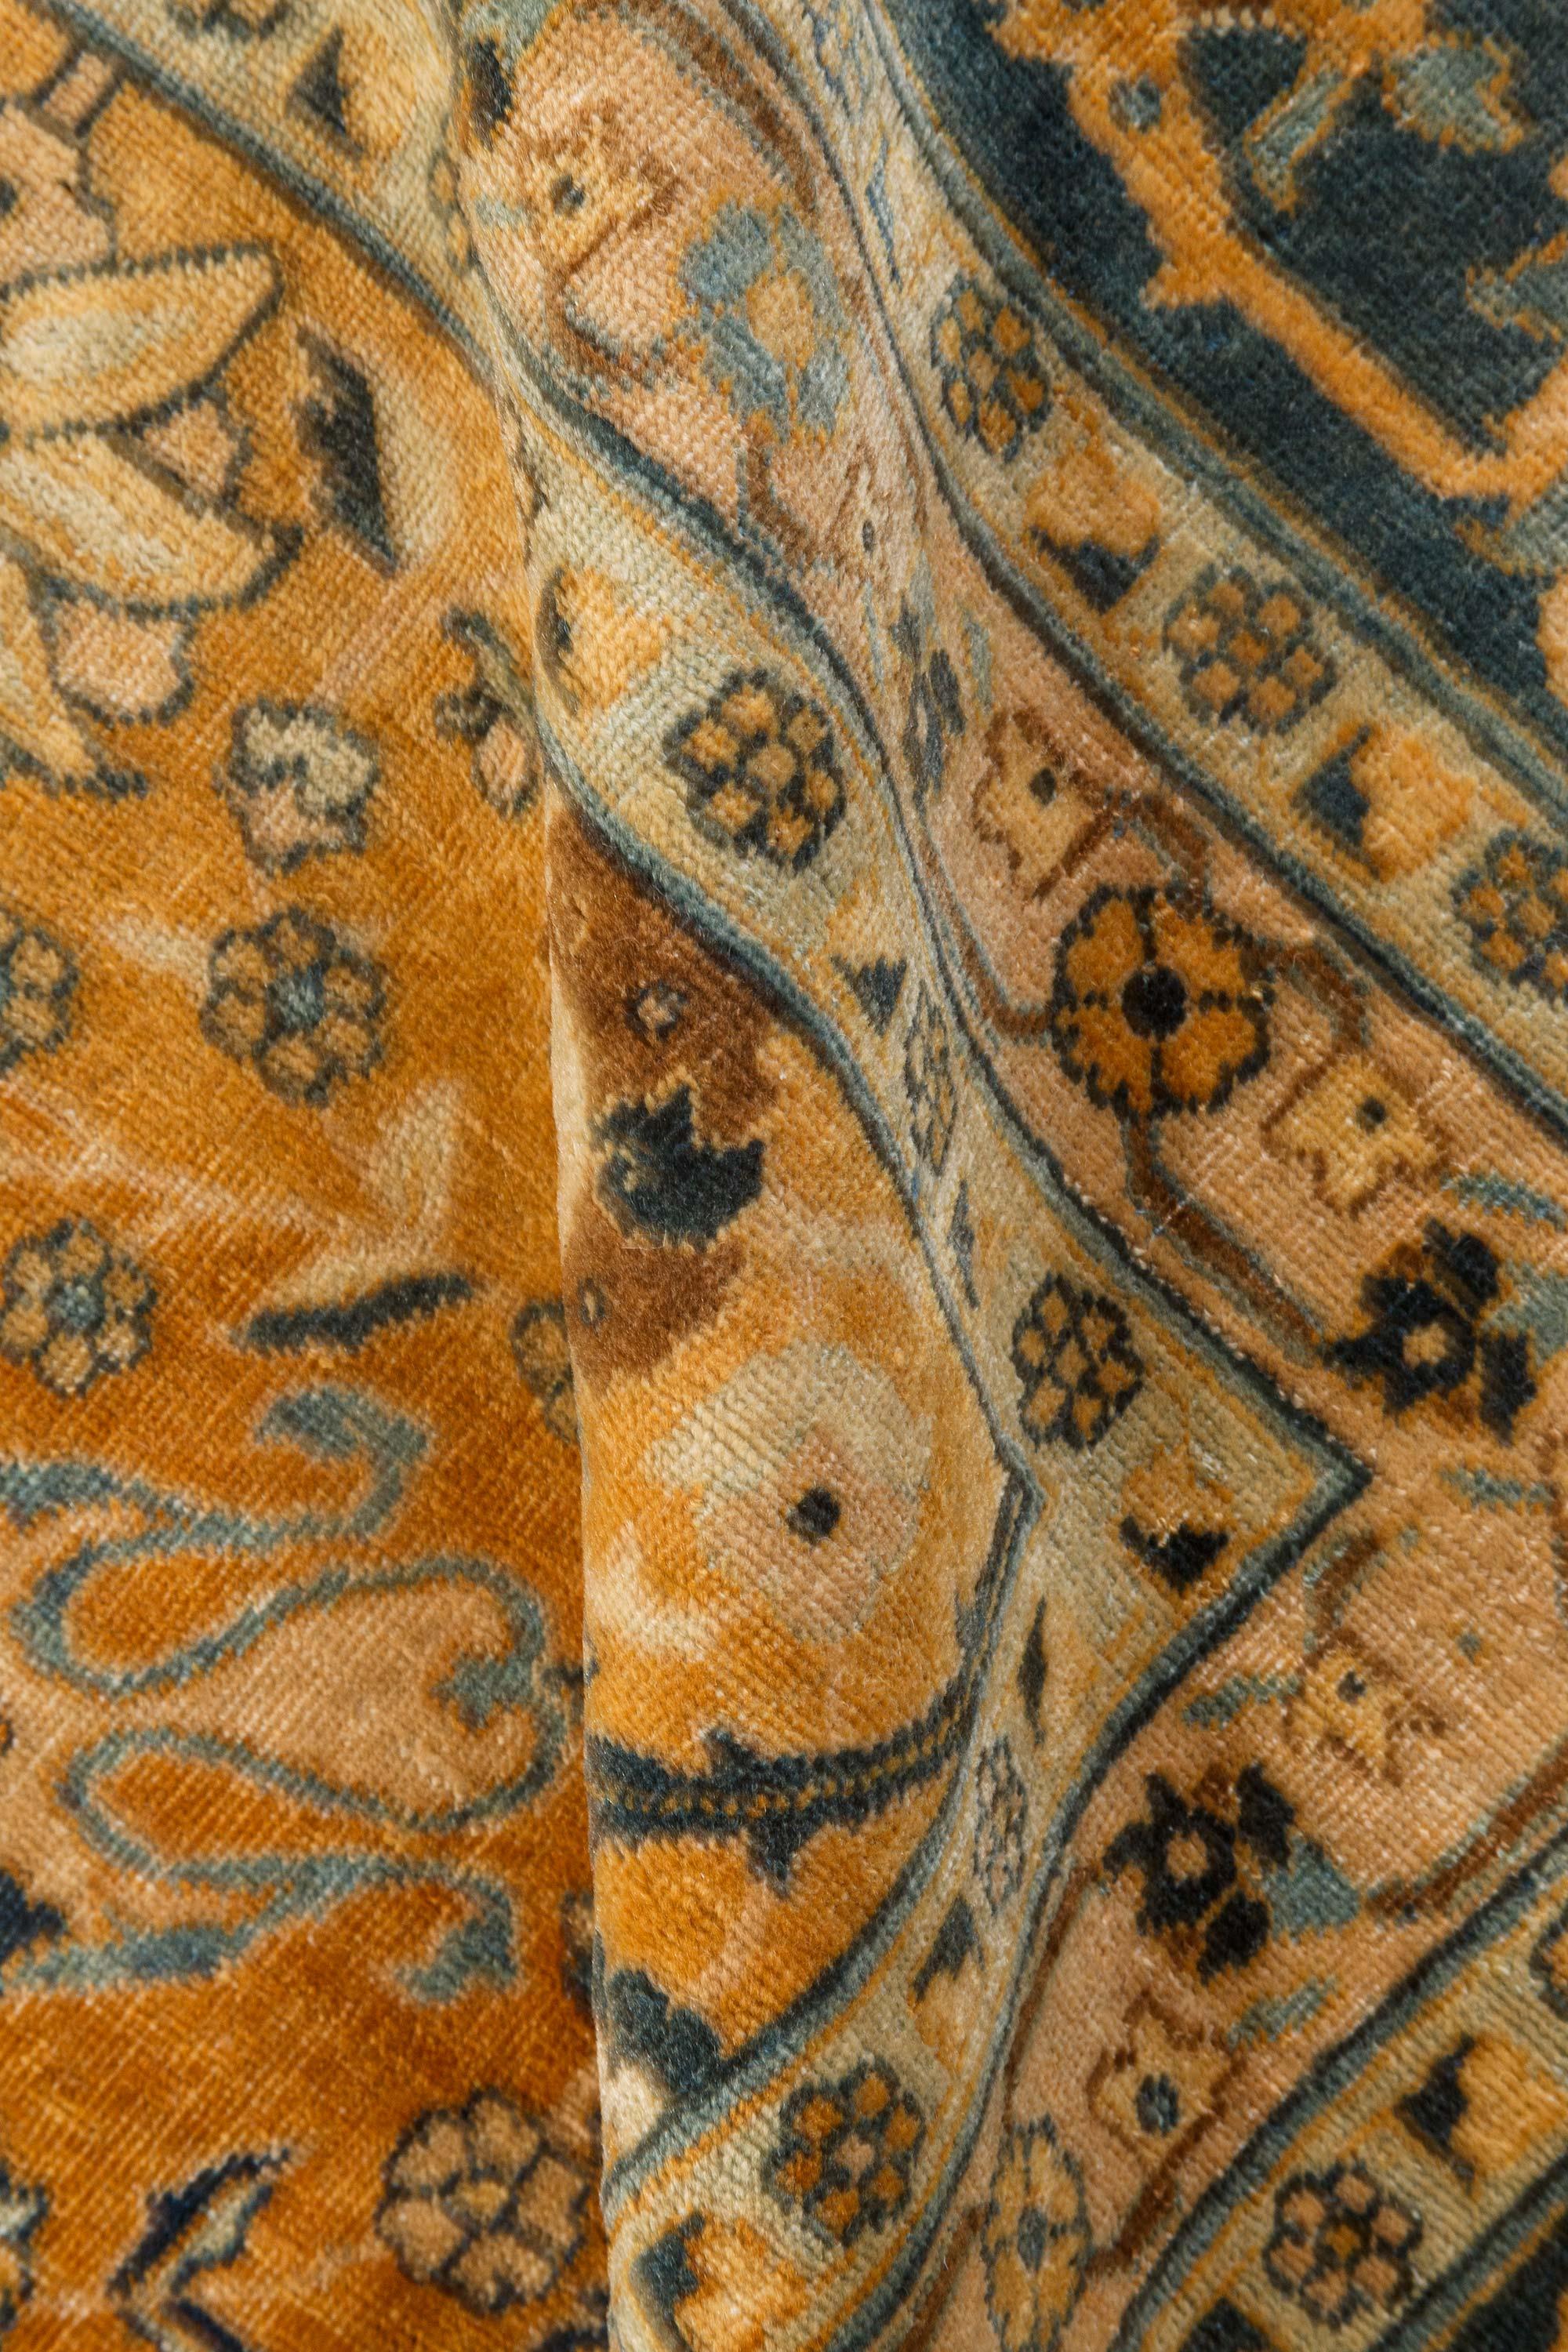 Authentic 1900s Persian Tabriz Blue, Yellow Handmade Wool Rug
Size: 11'9